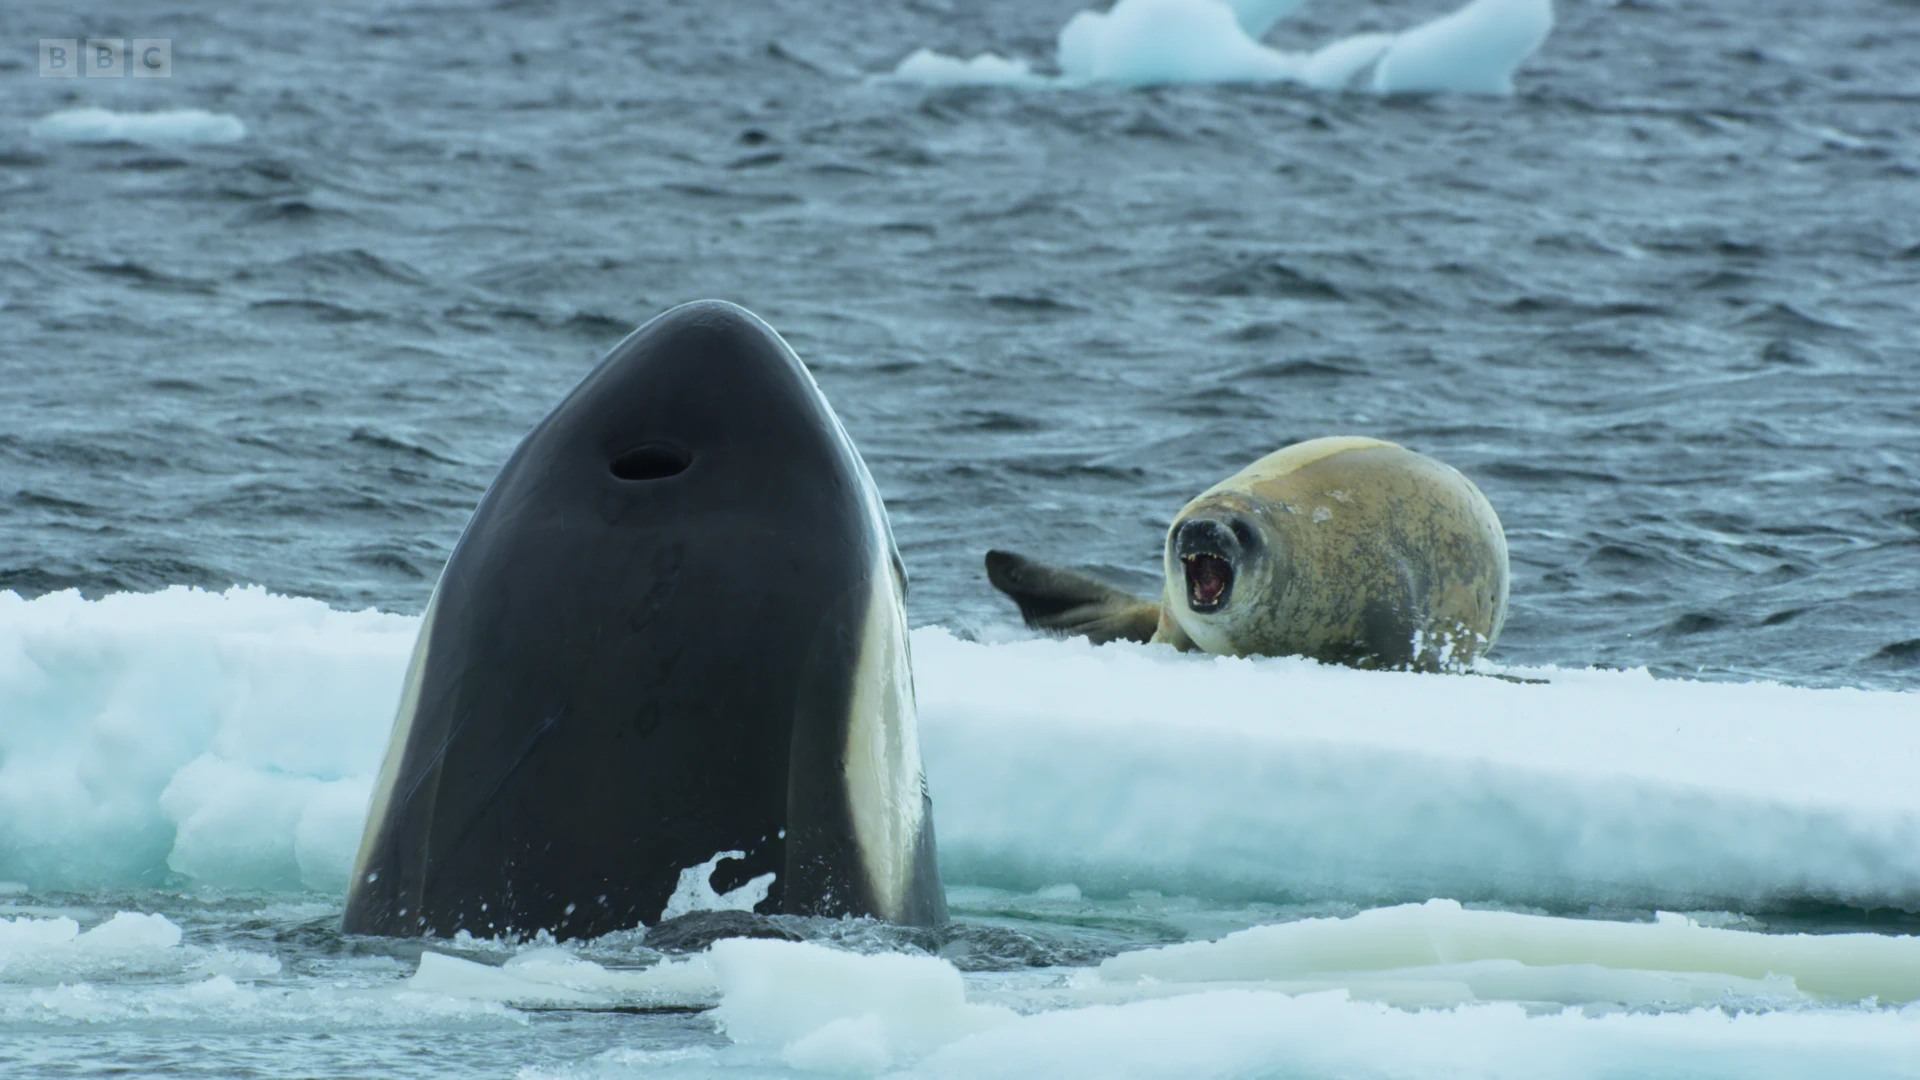 Crabeater seal (Lobodon carcinophaga) as shown in Frozen Planet II - Frozen South